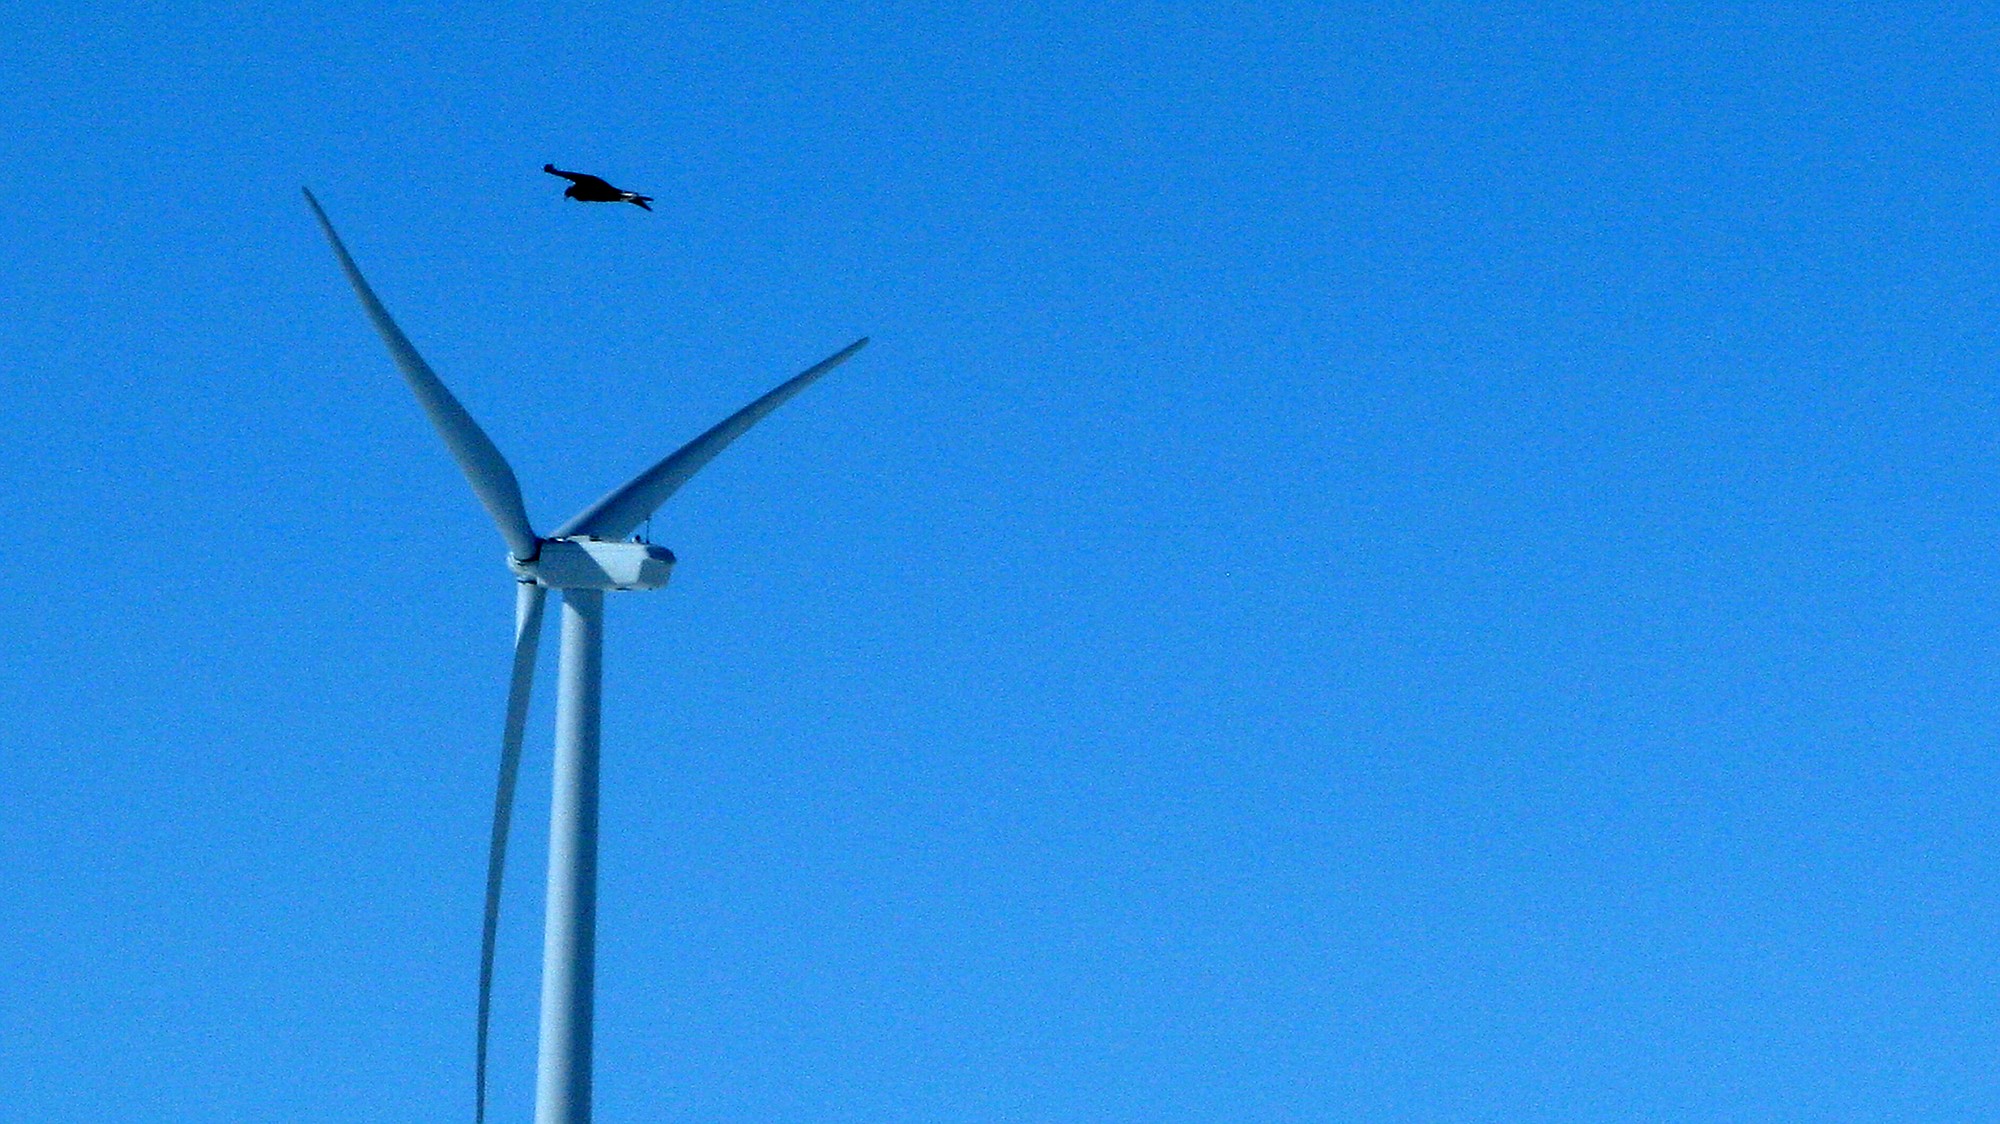 A golden eagle flies over a wind turbine wind farm in Converse County Wyo.